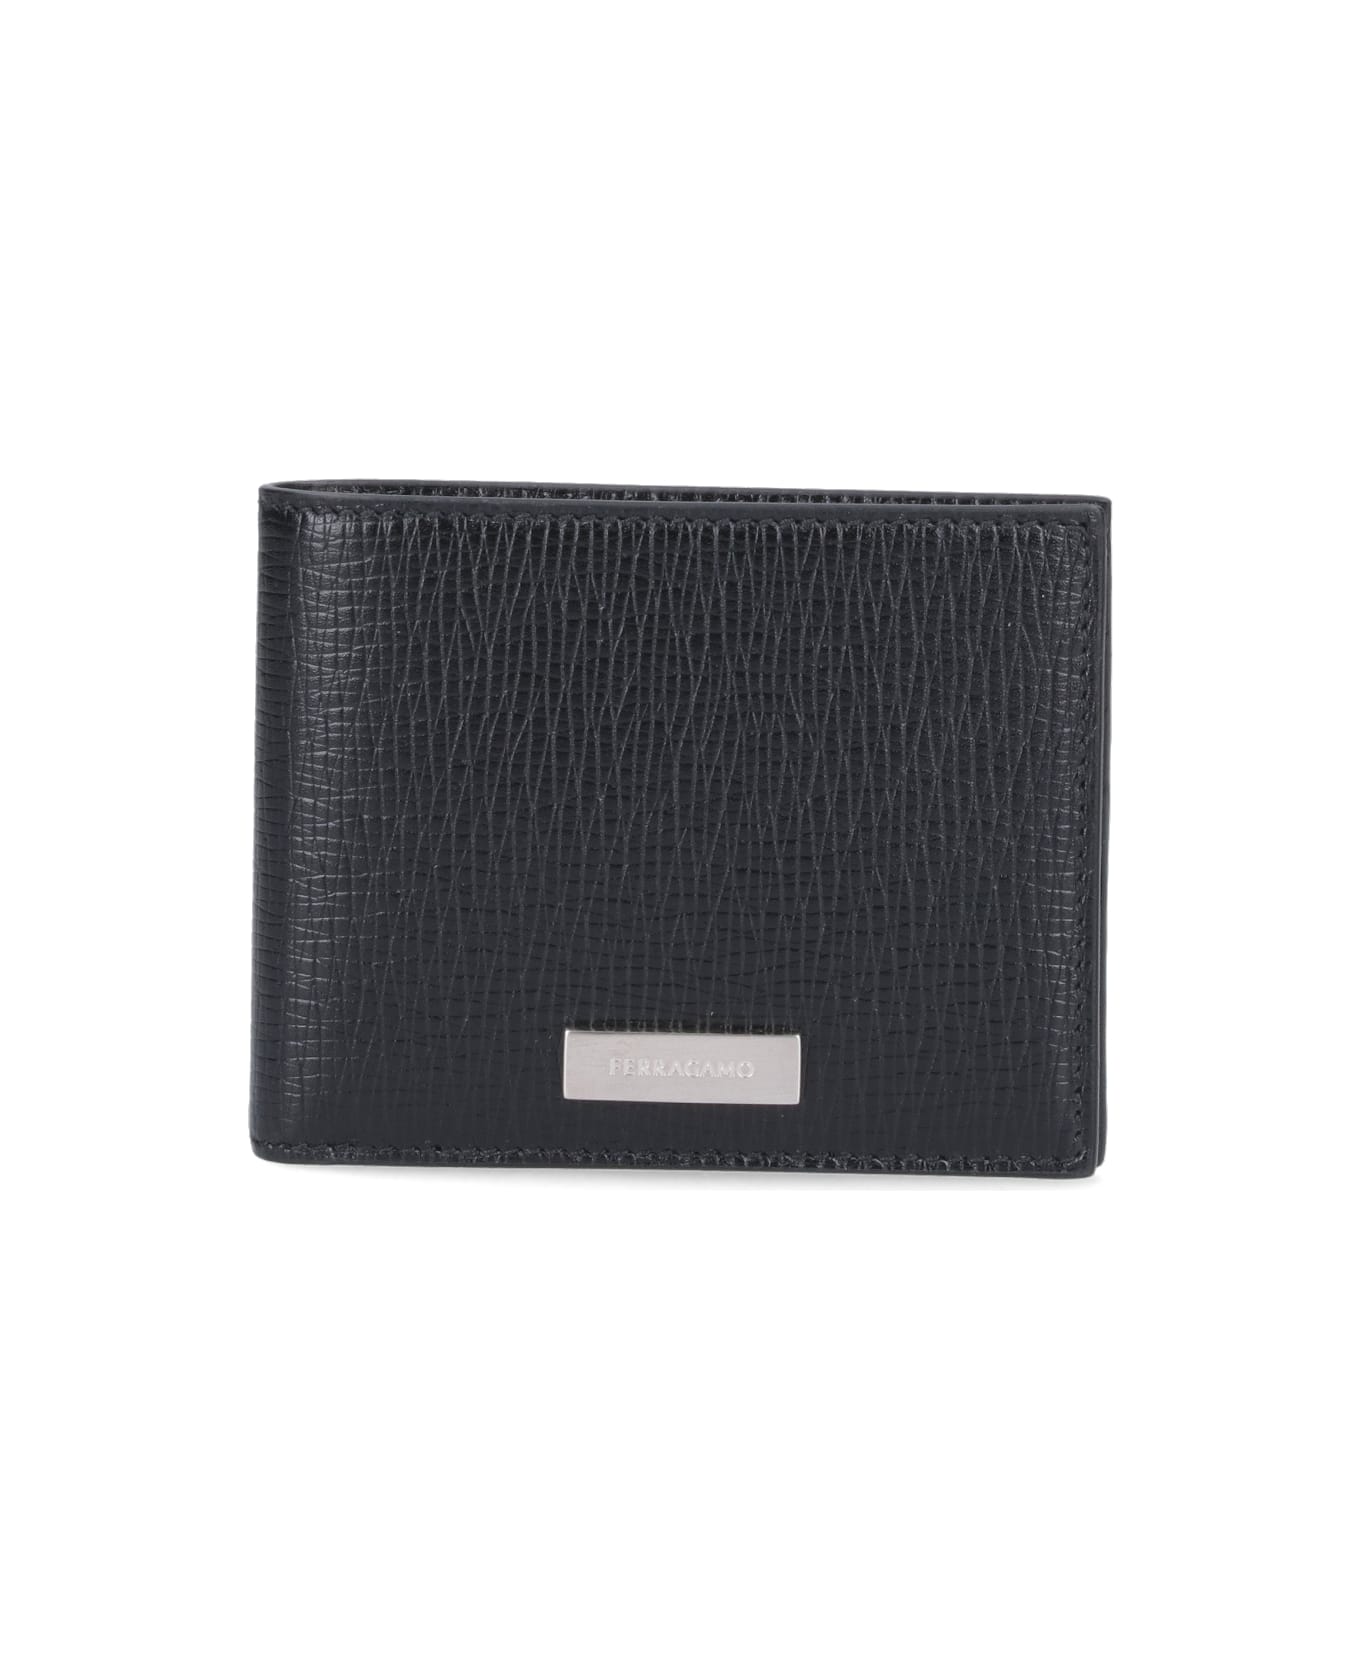 Ferragamo Bi-fold Wallets - Black   財布